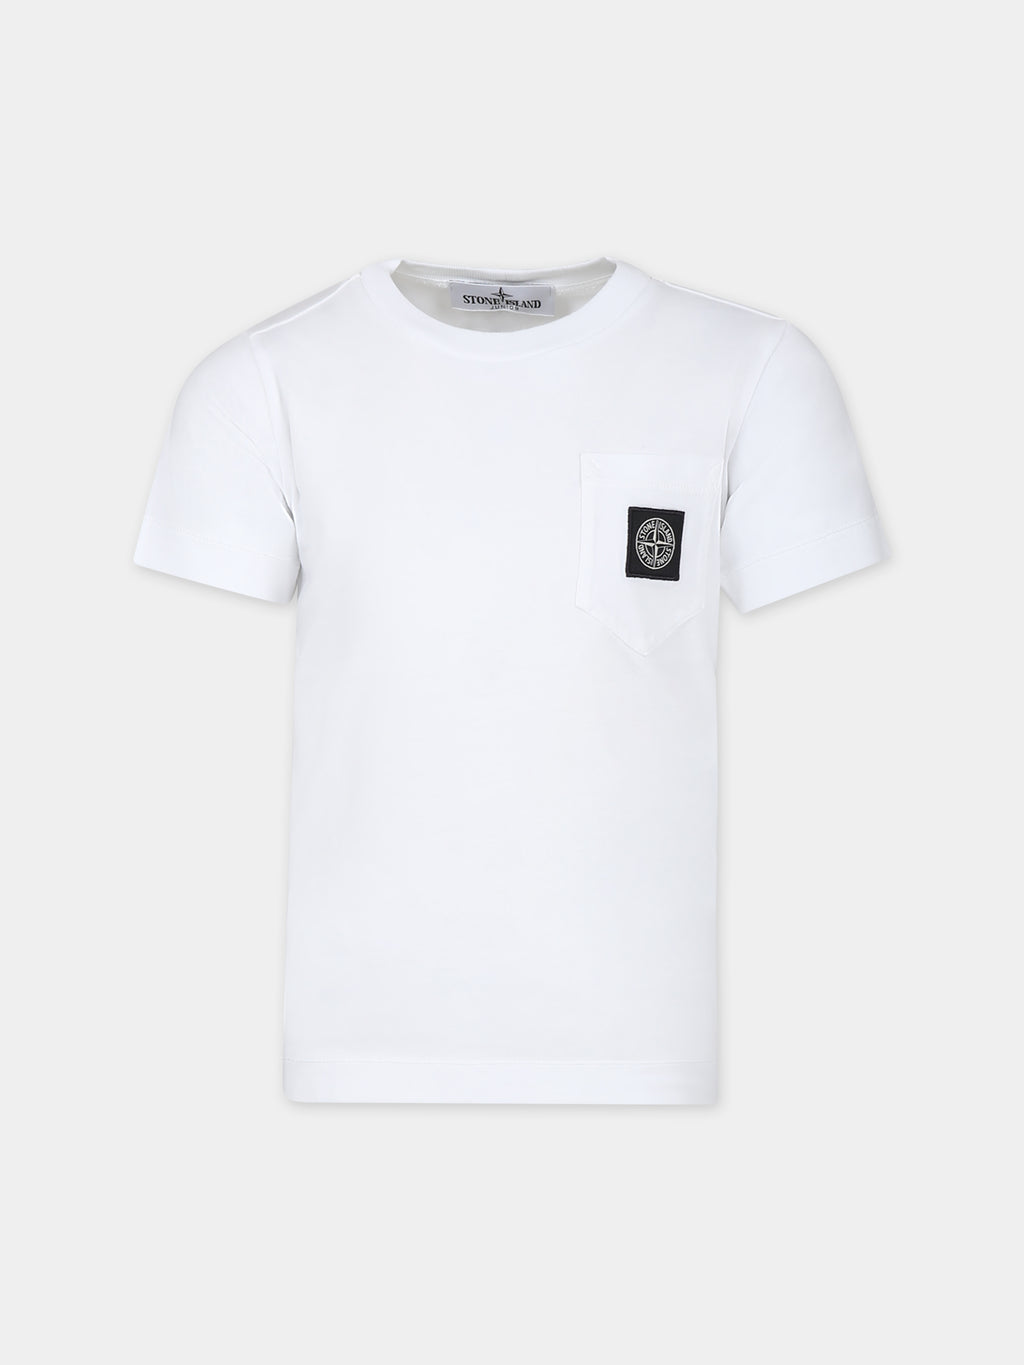 T-shirt bianca per bambino con iconica bussola